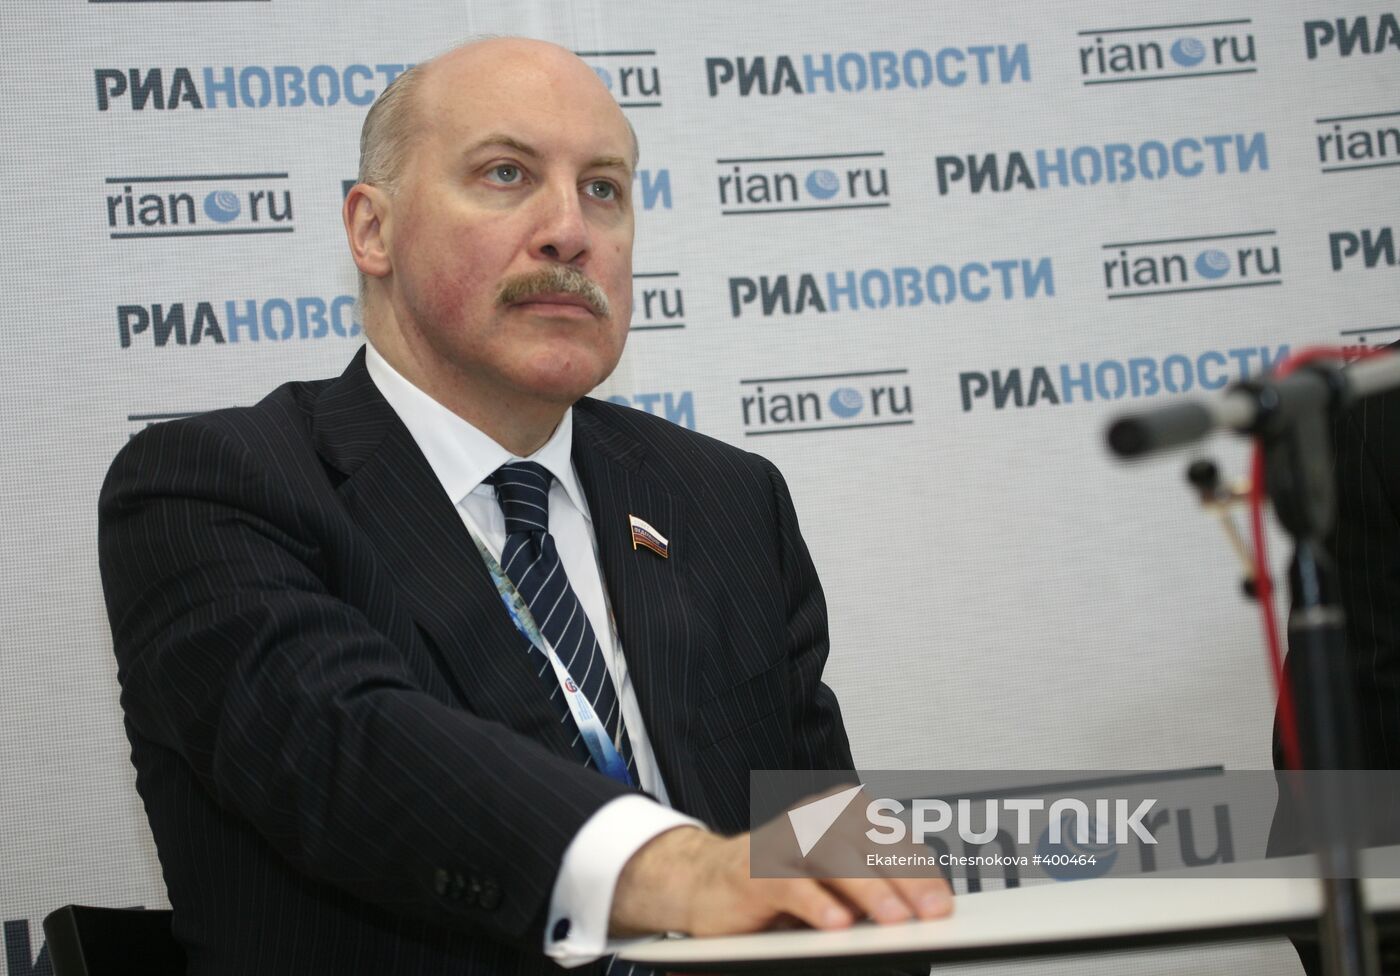 Dmitry Mezentsev briefs press at St. Petersburg Forum